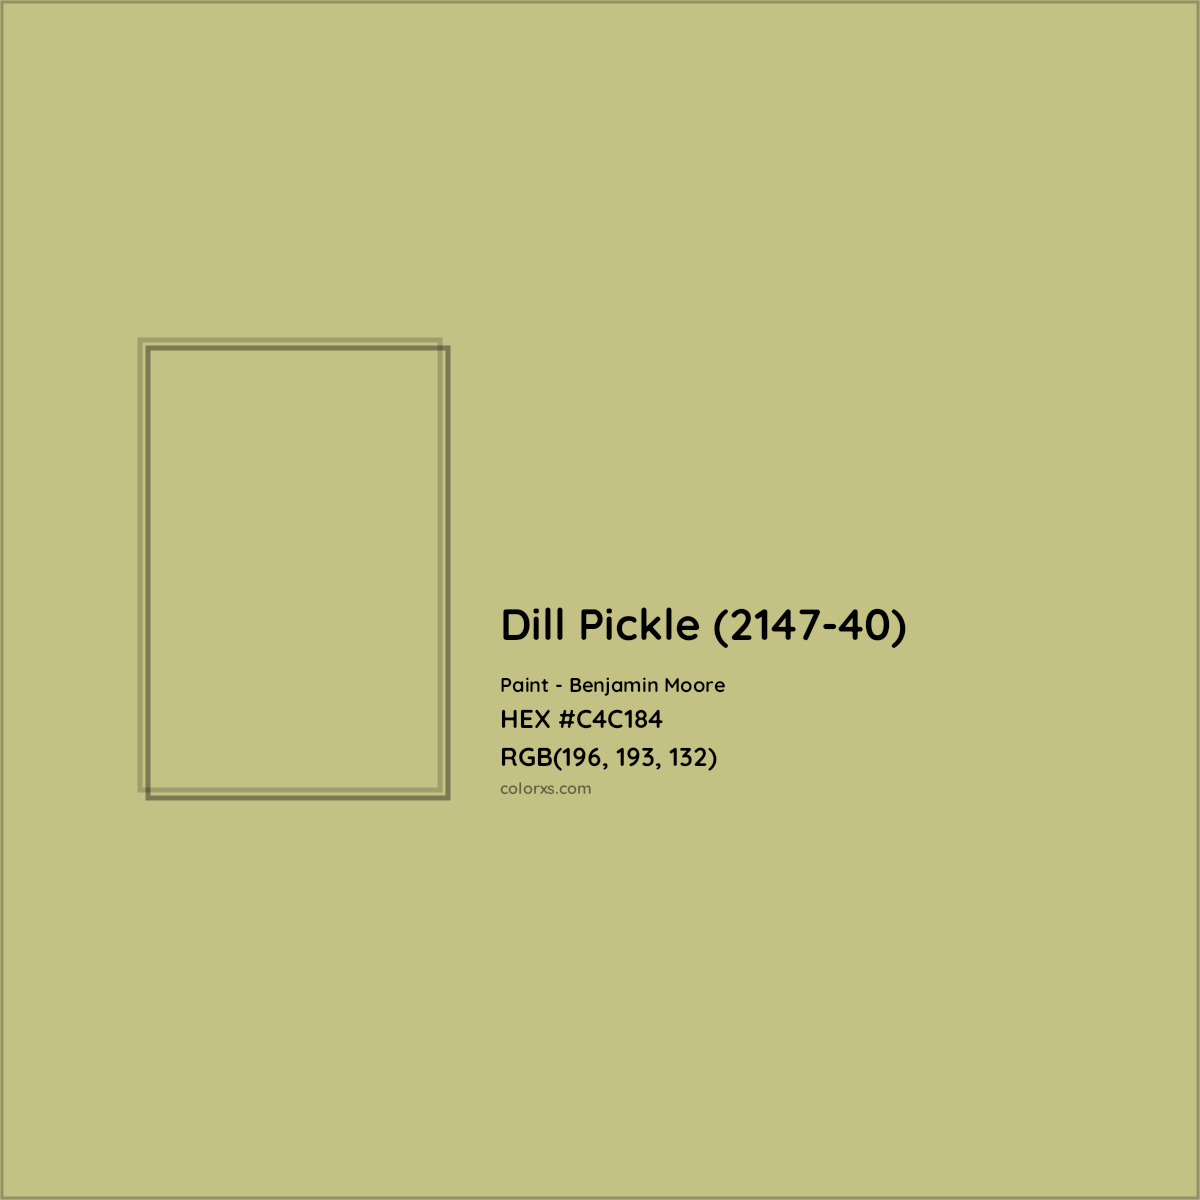 HEX #C4C184 Dill Pickle (2147-40) Paint Benjamin Moore - Color Code